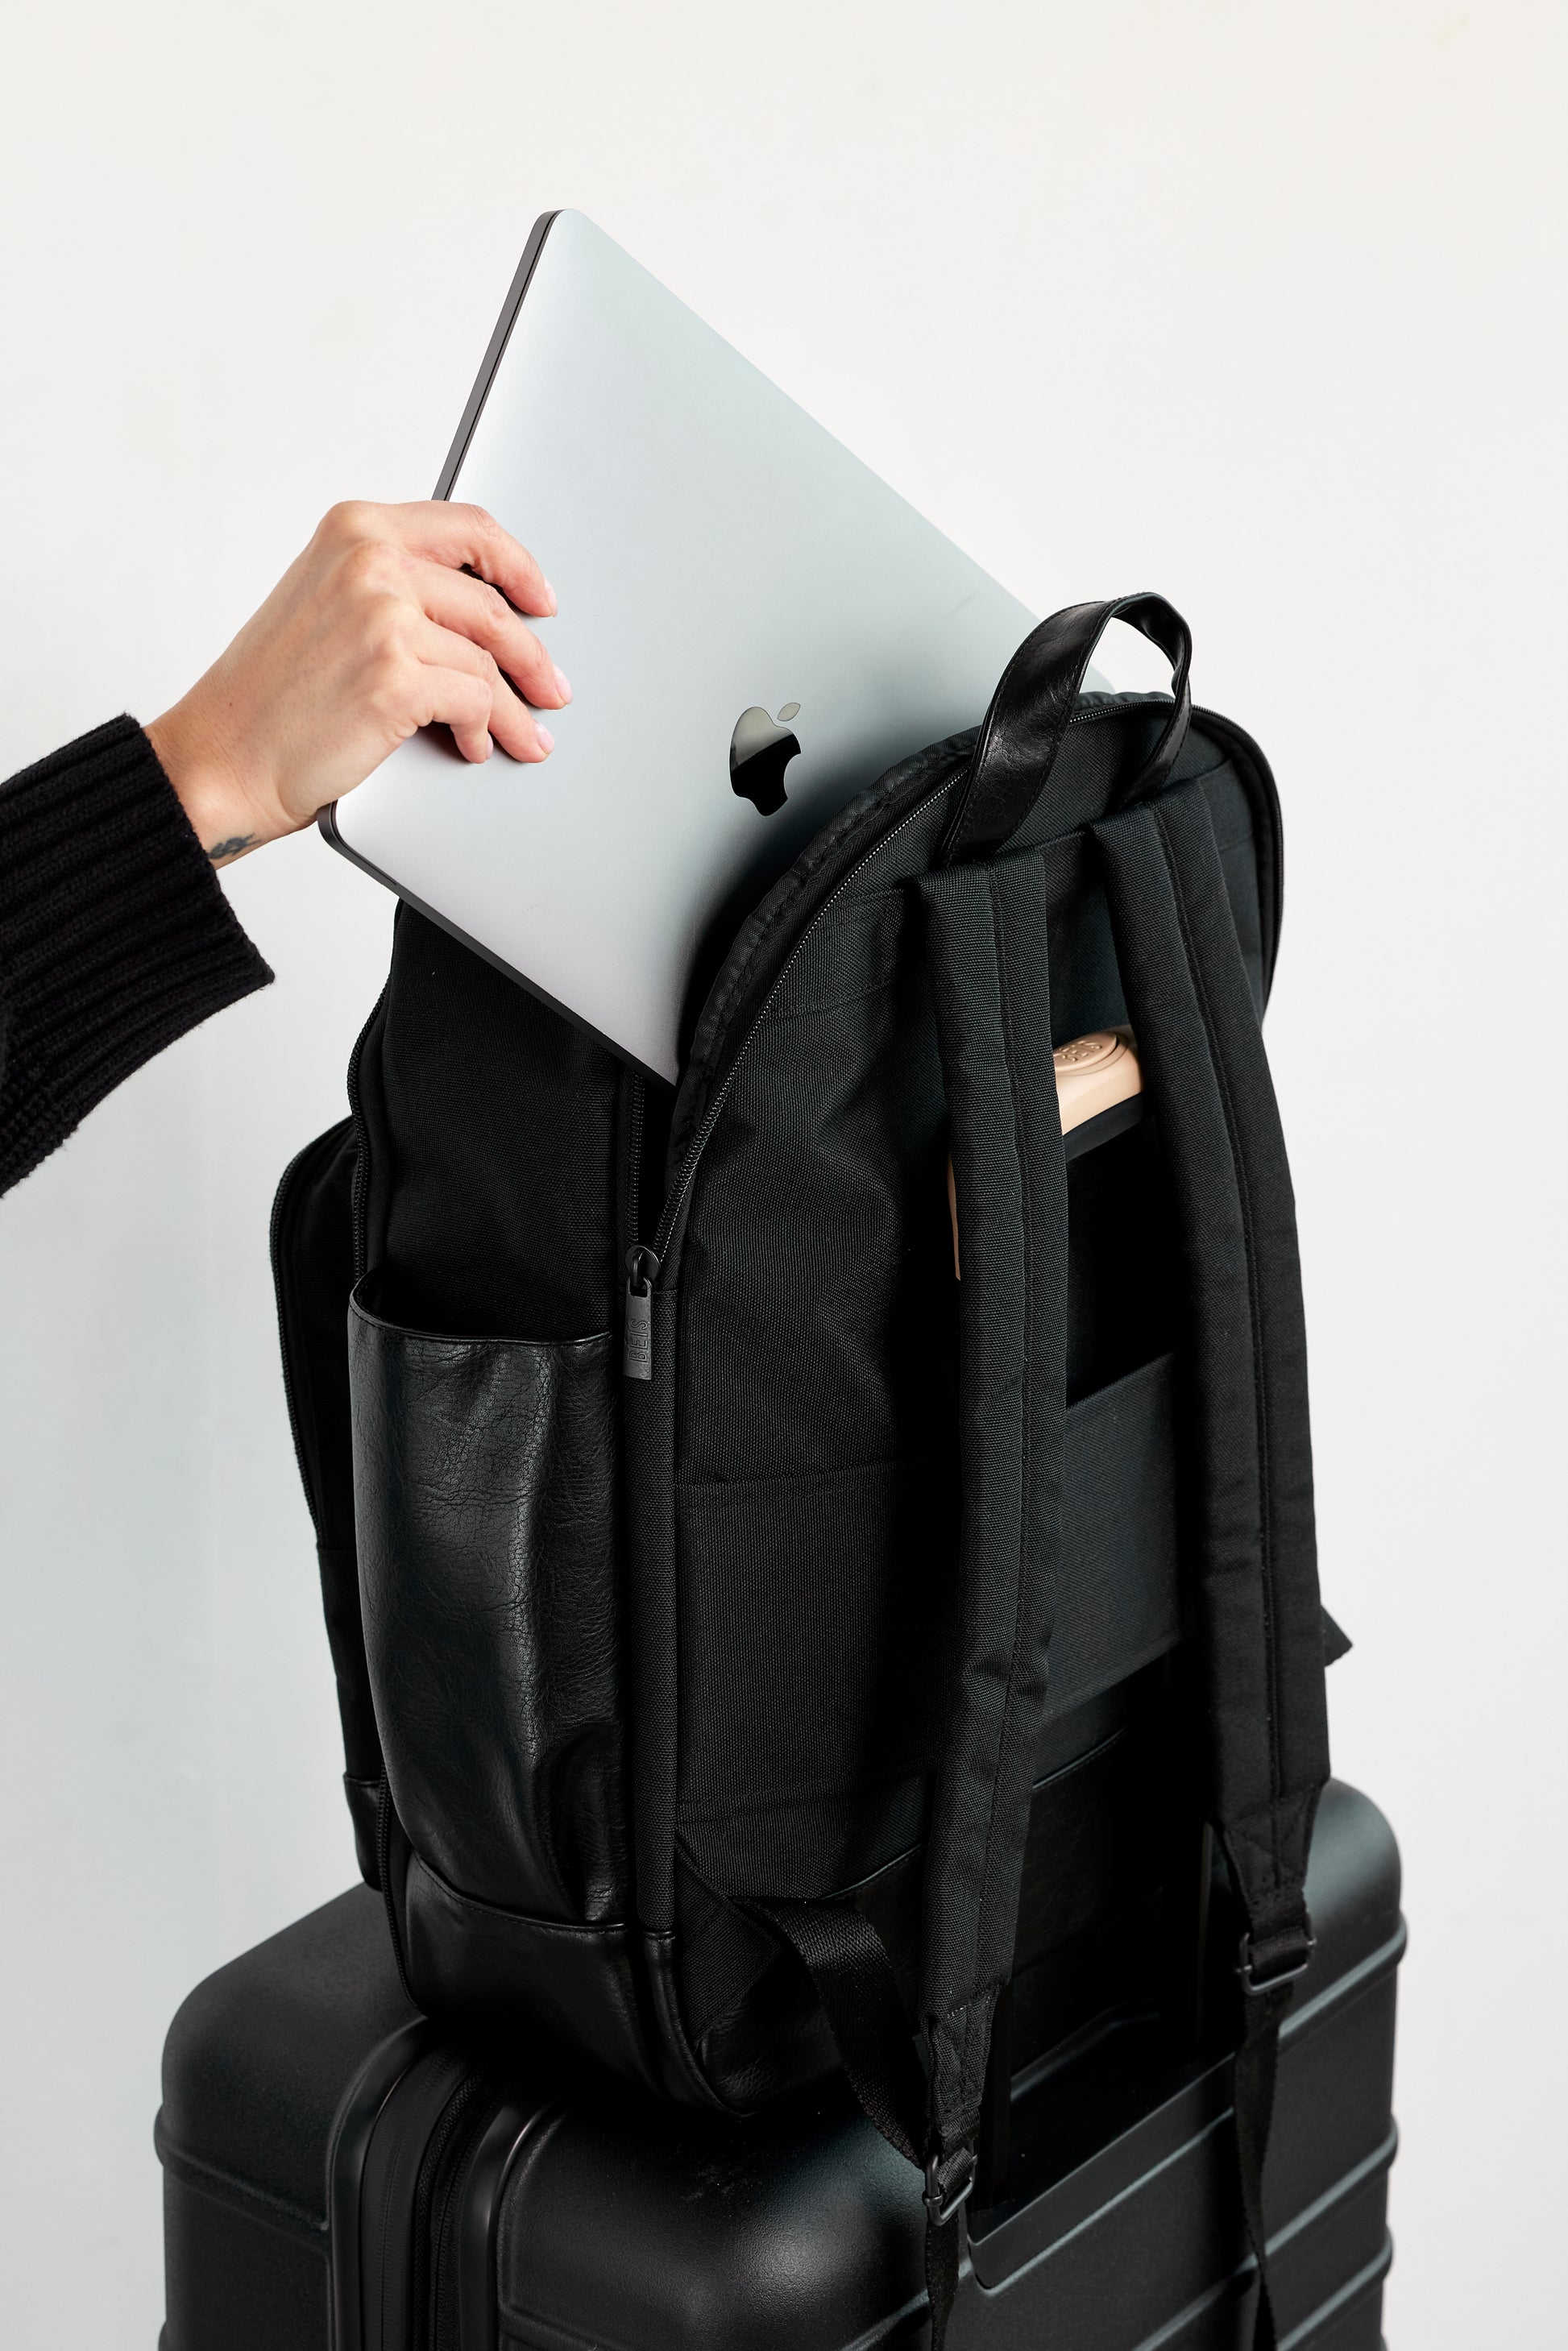 Designer Computer Bag Convertible Laptop Bag Black Leather 